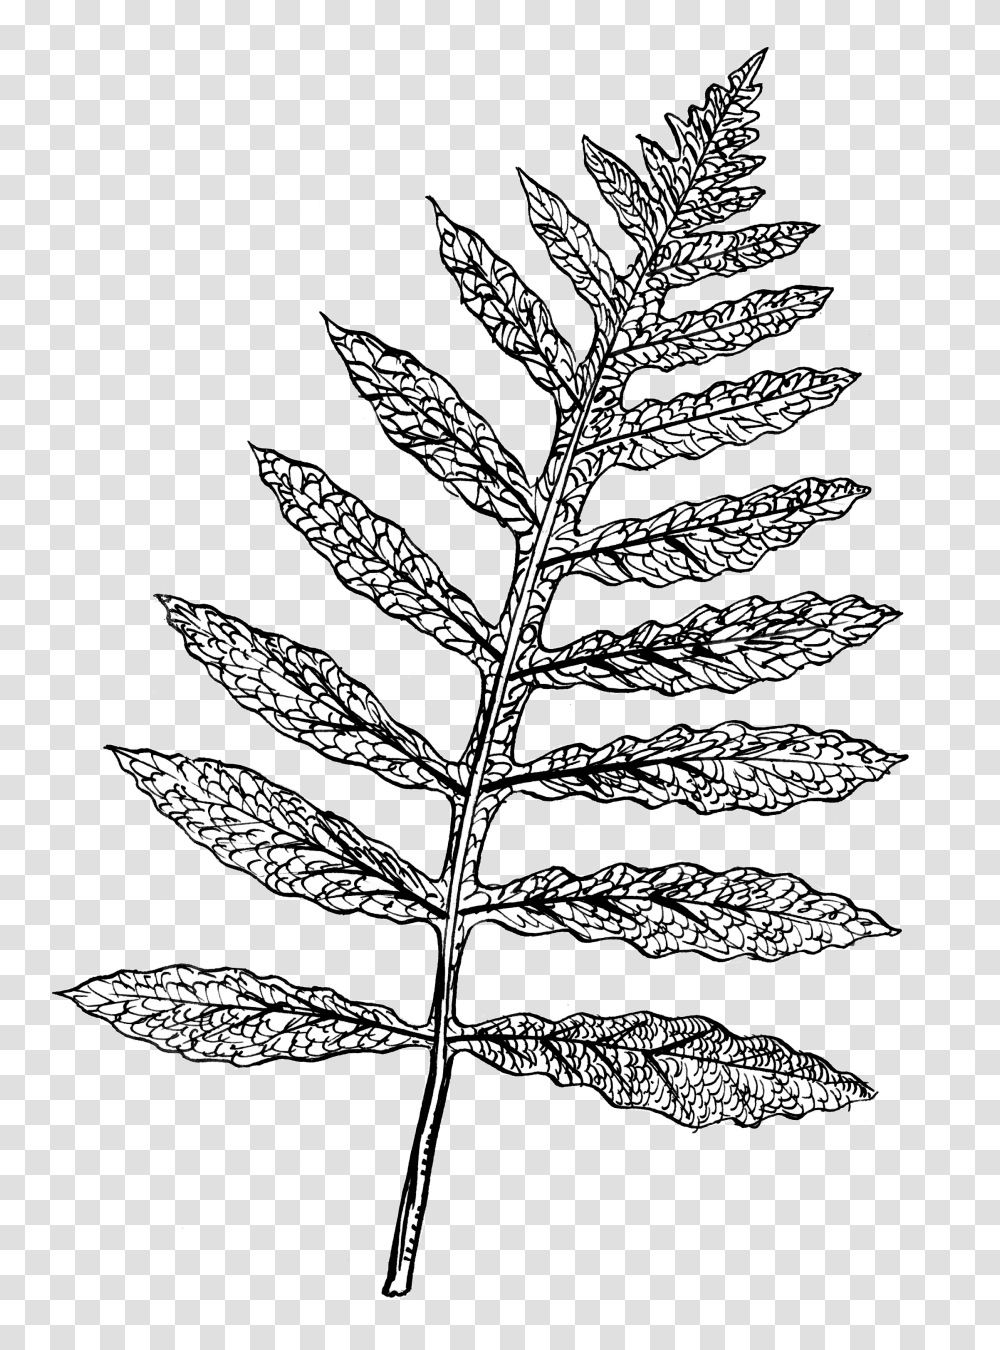 Filesensitive Fern Psfpng Wikimedia Commons Line Drawing Sensitive Fern, Plant, Bird, Animal, Leaf Transparent Png